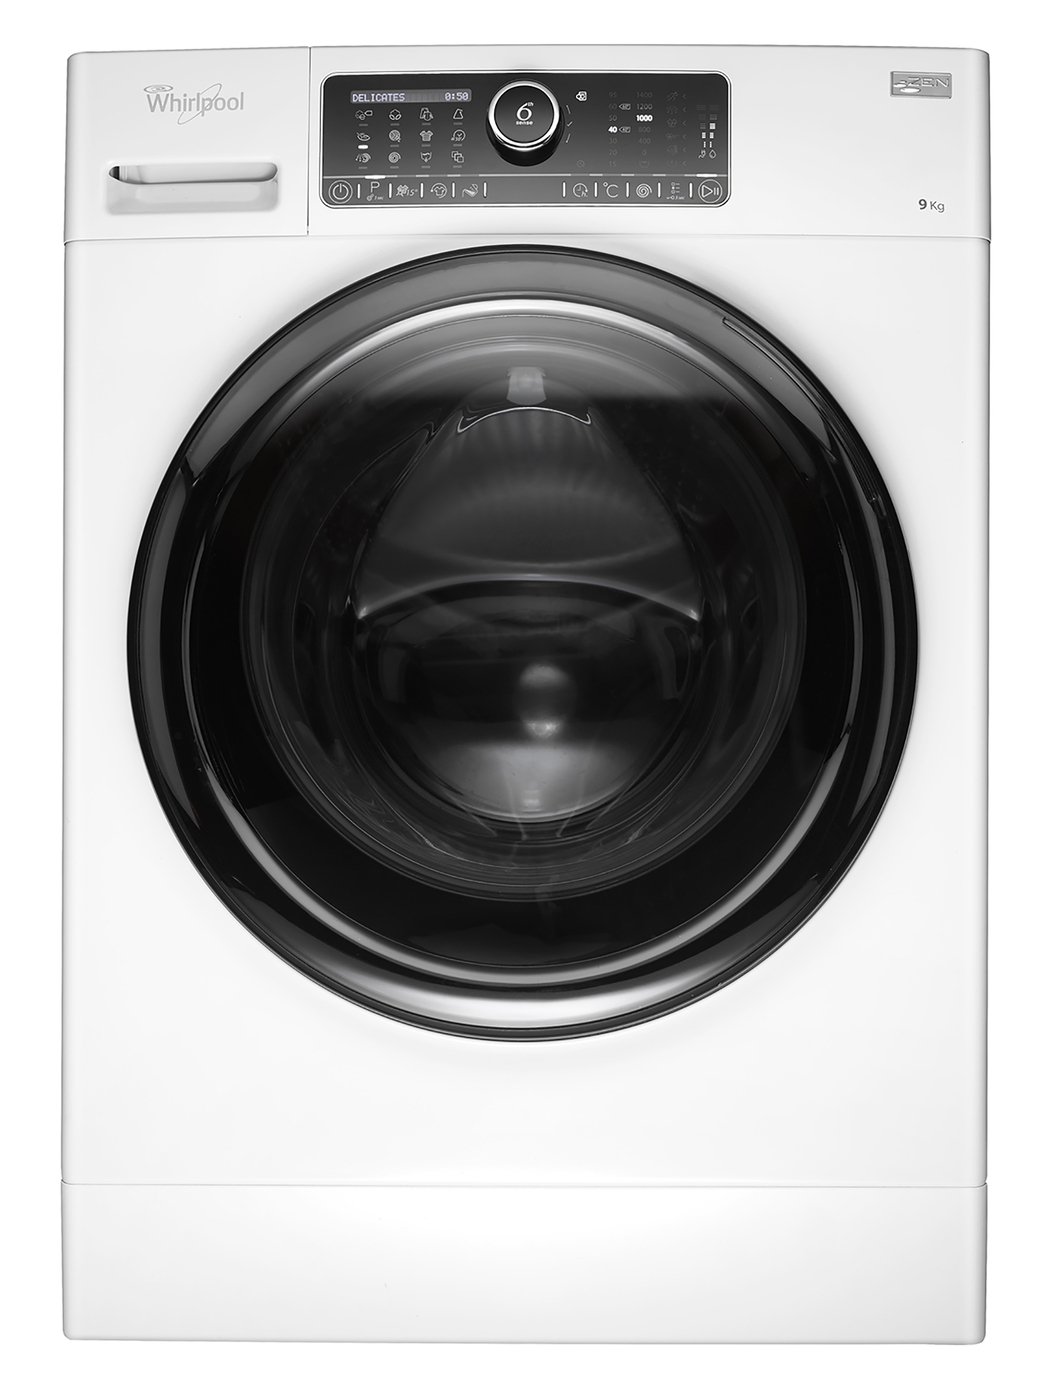 Whirlpool FSCR90430 9KG 1400 Spin Washing Machine - White